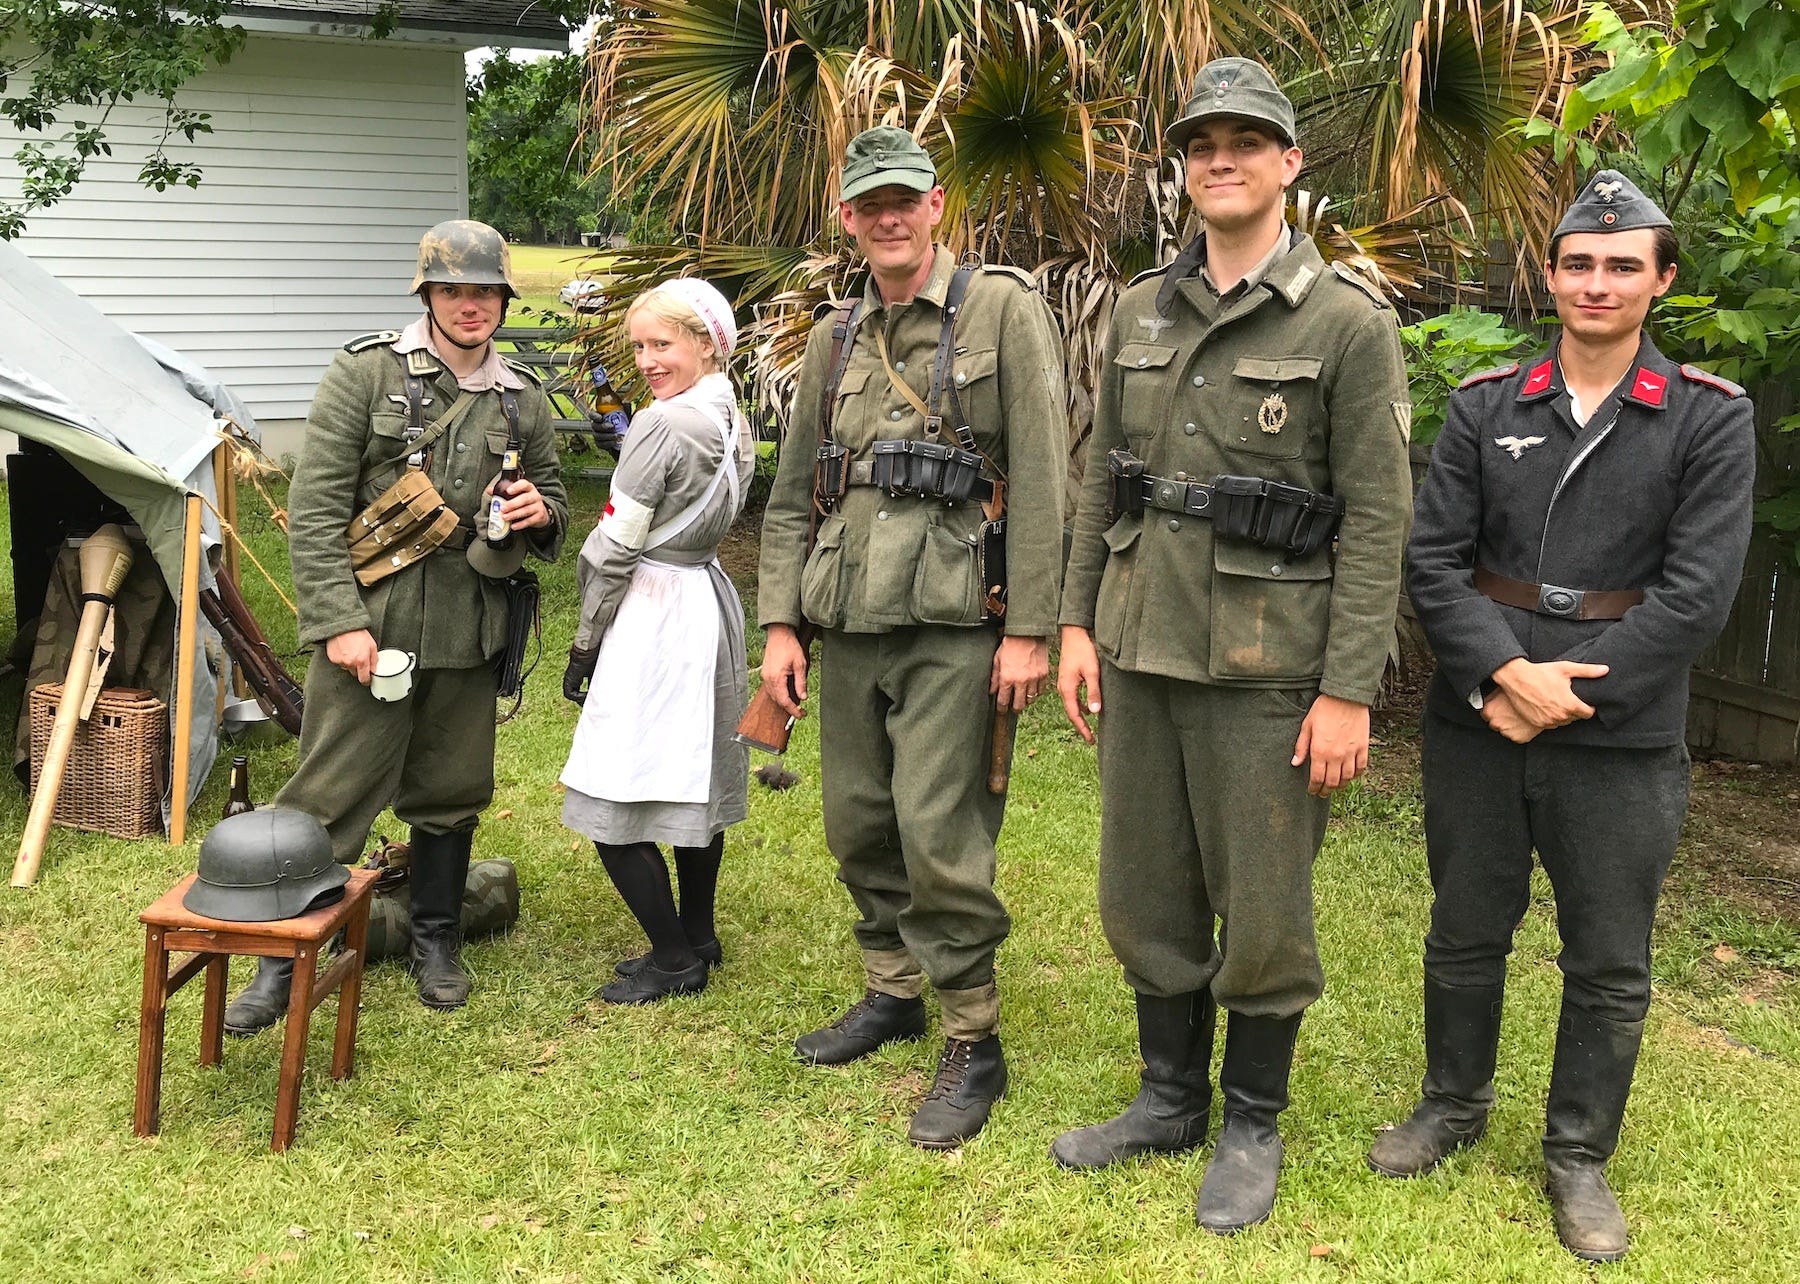 Local World War II reenactors portray German troops at the June Laurel Hill Arts and Heritage Festival. From left are Dako Morfey, Dottie Dellamorte (portraying a German Red Cross nurse), Michael Sullivan, Andrew Daigle and Brennan Donch.